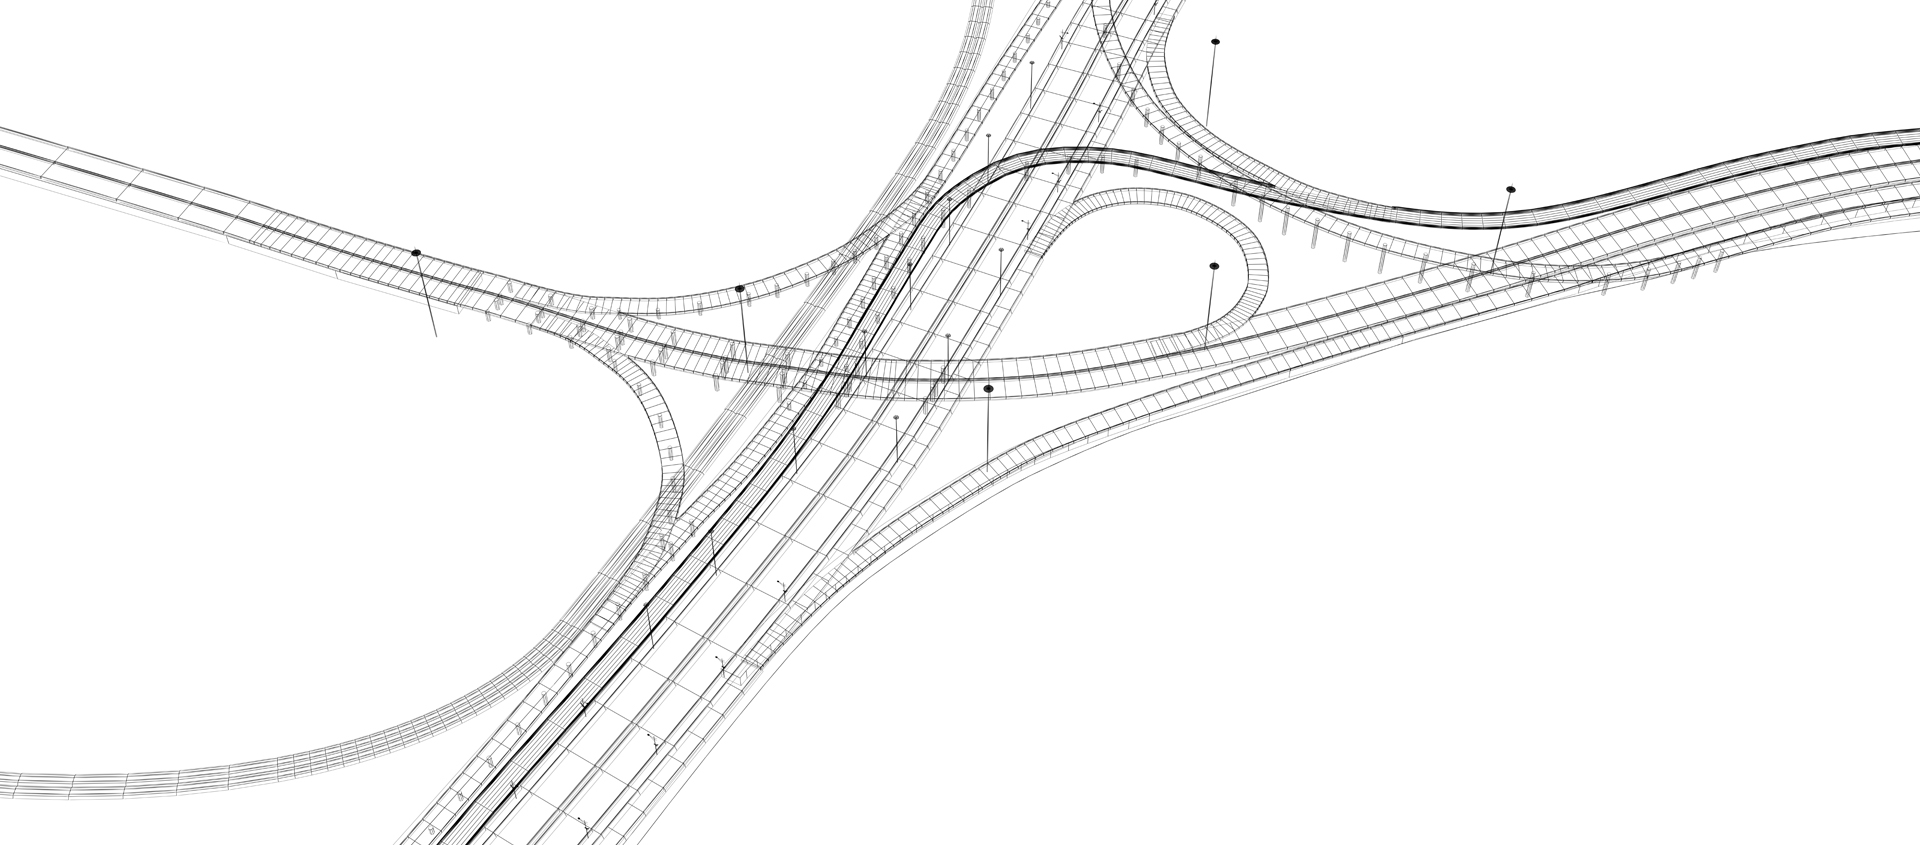 Highway design